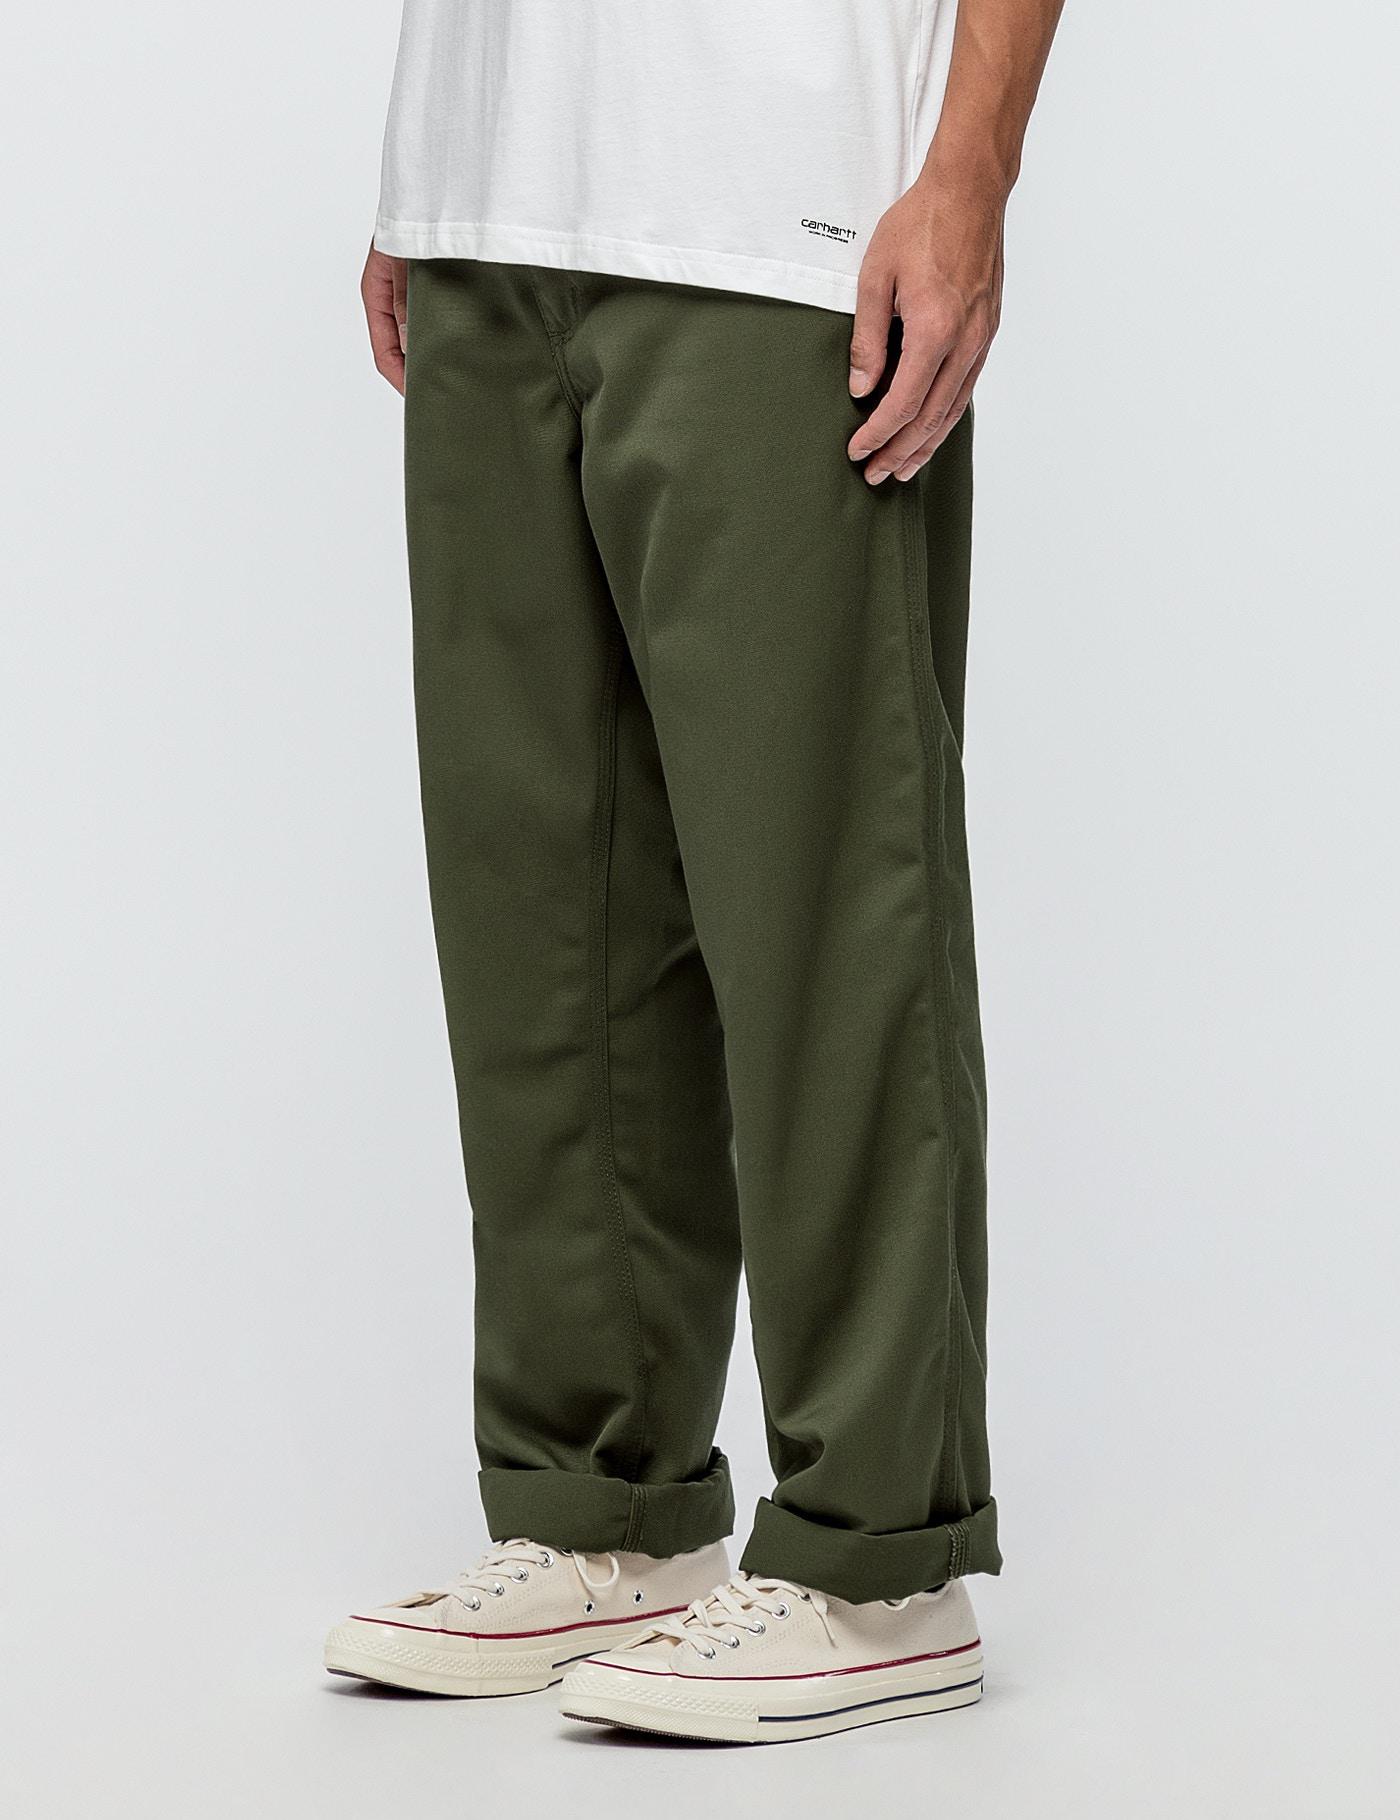 Lyst - Carhartt Wip Simple Pants in Green for Men